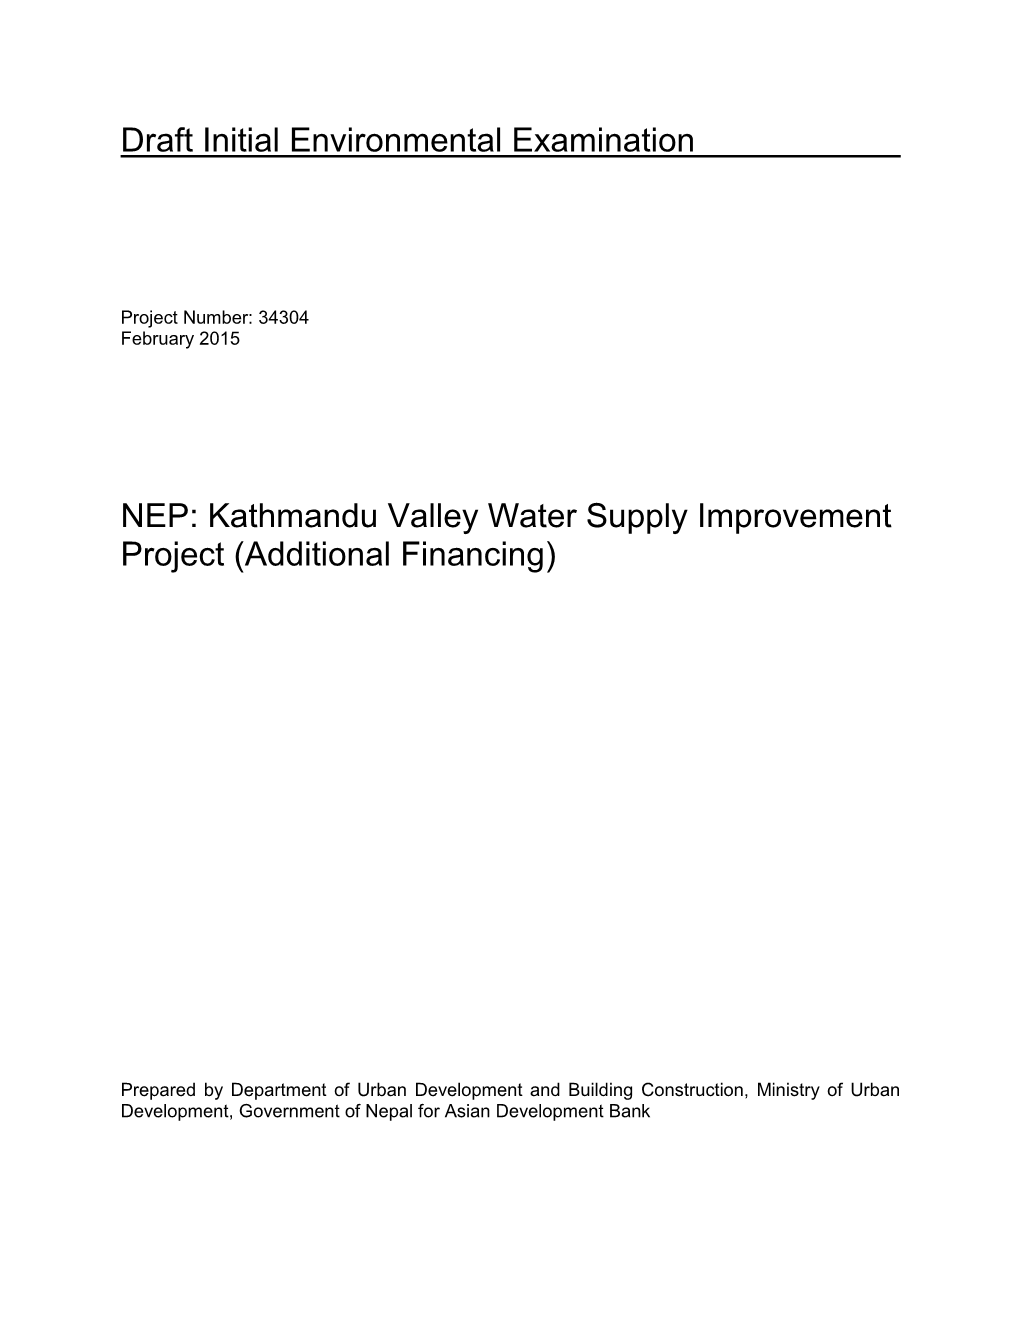 Kathmandu Valley Water Supply Improvement Project (Additional Financing)